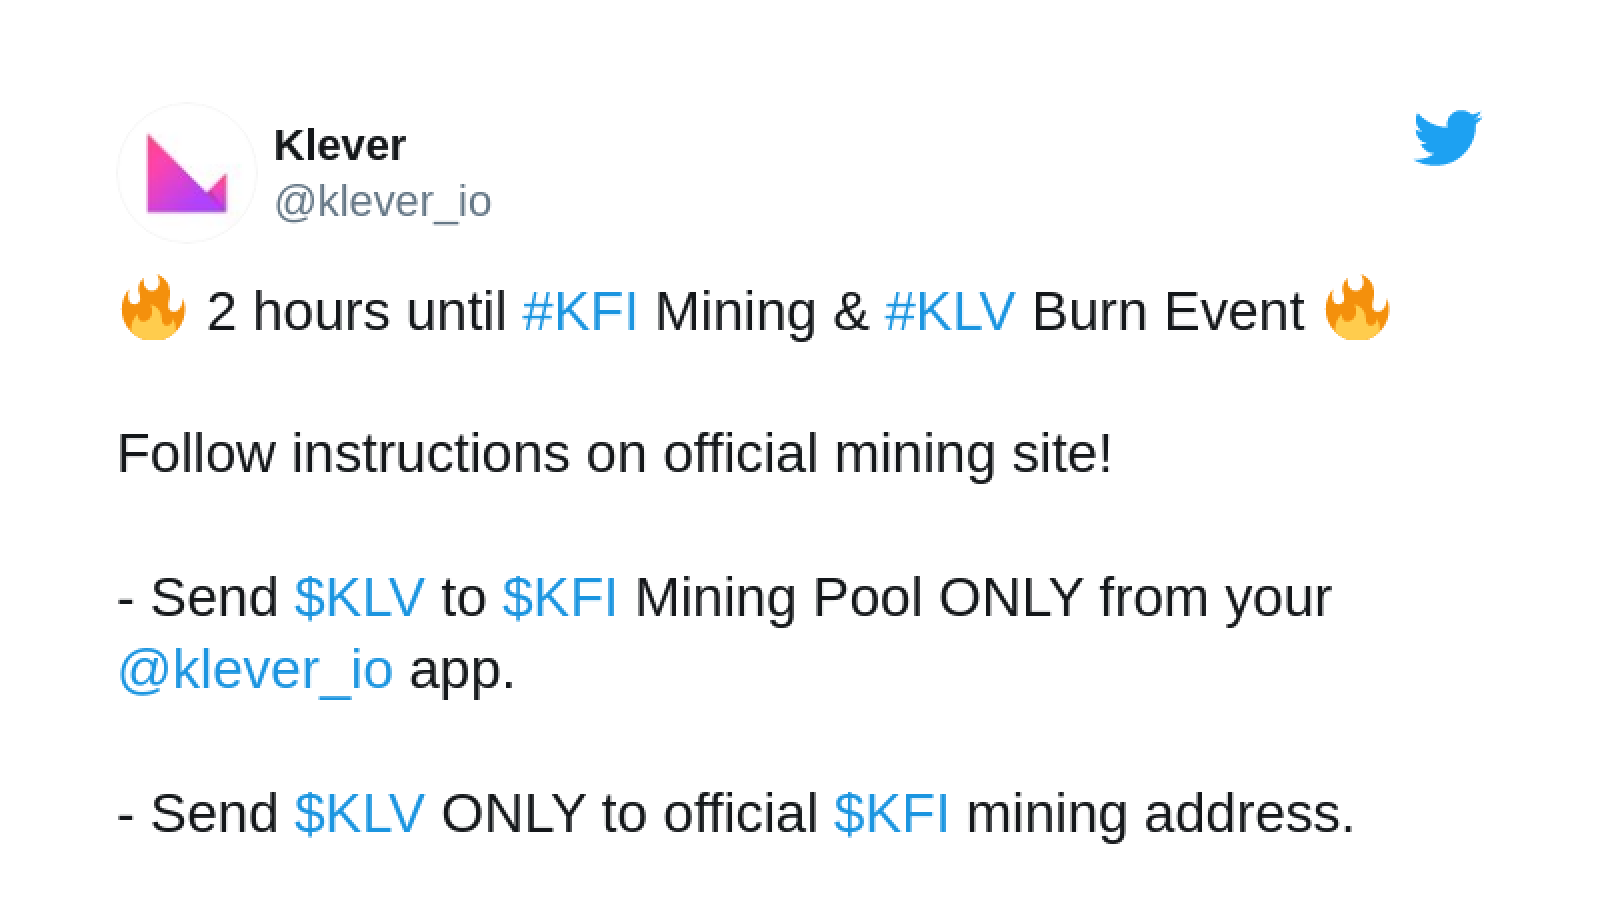 Klever blockchain launches KFI mining event